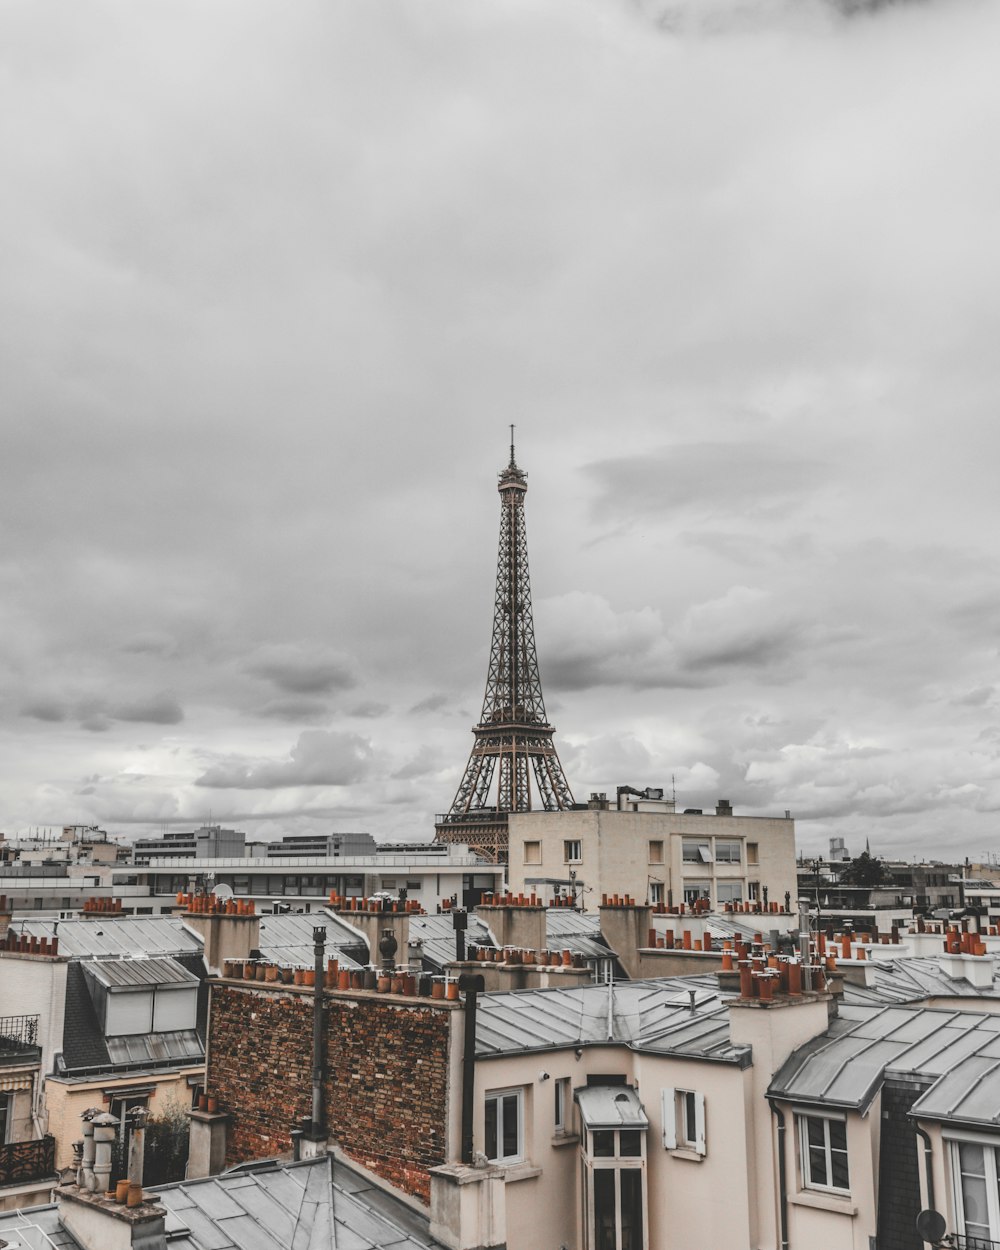 Eiffel tower under gray clouds